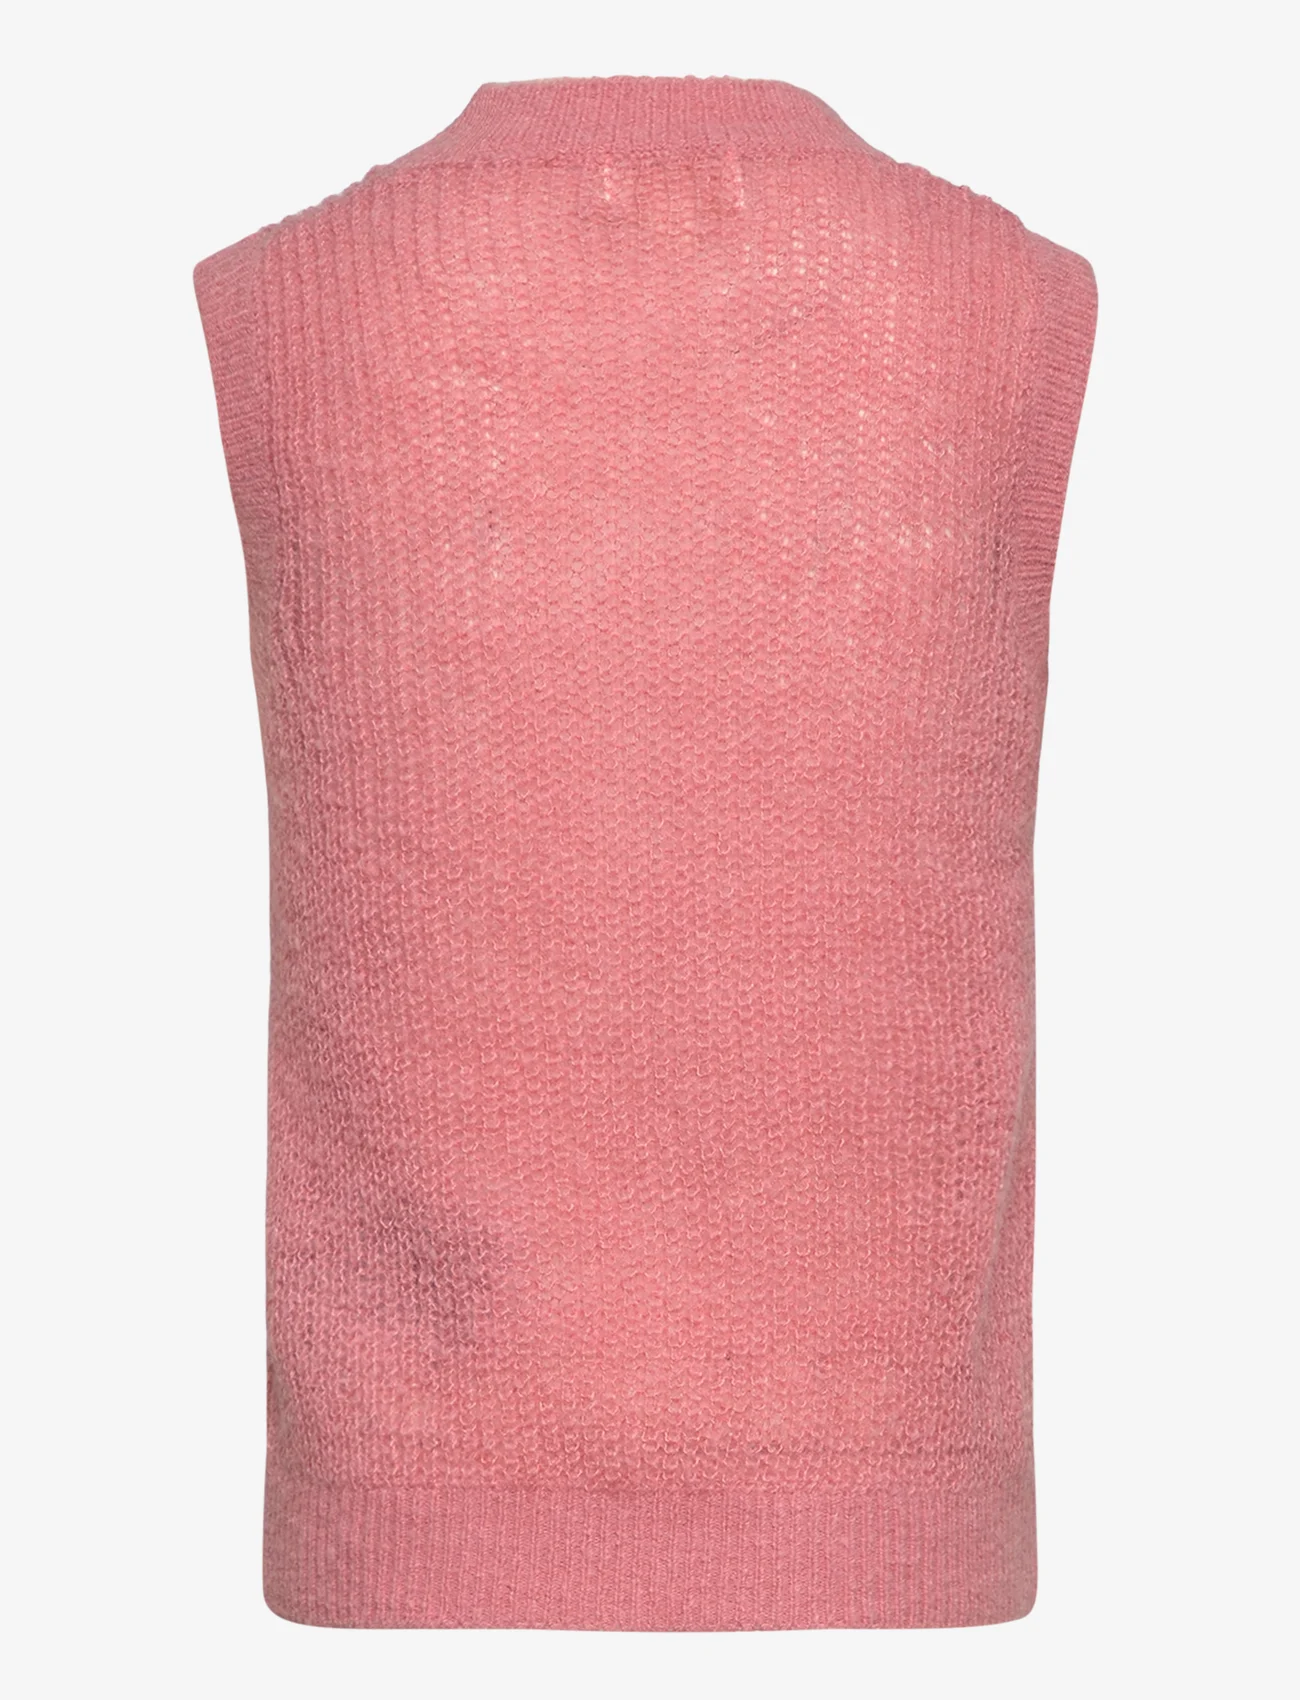 Creamie - Slipover Knit - najniższe ceny - dusty rose - 1